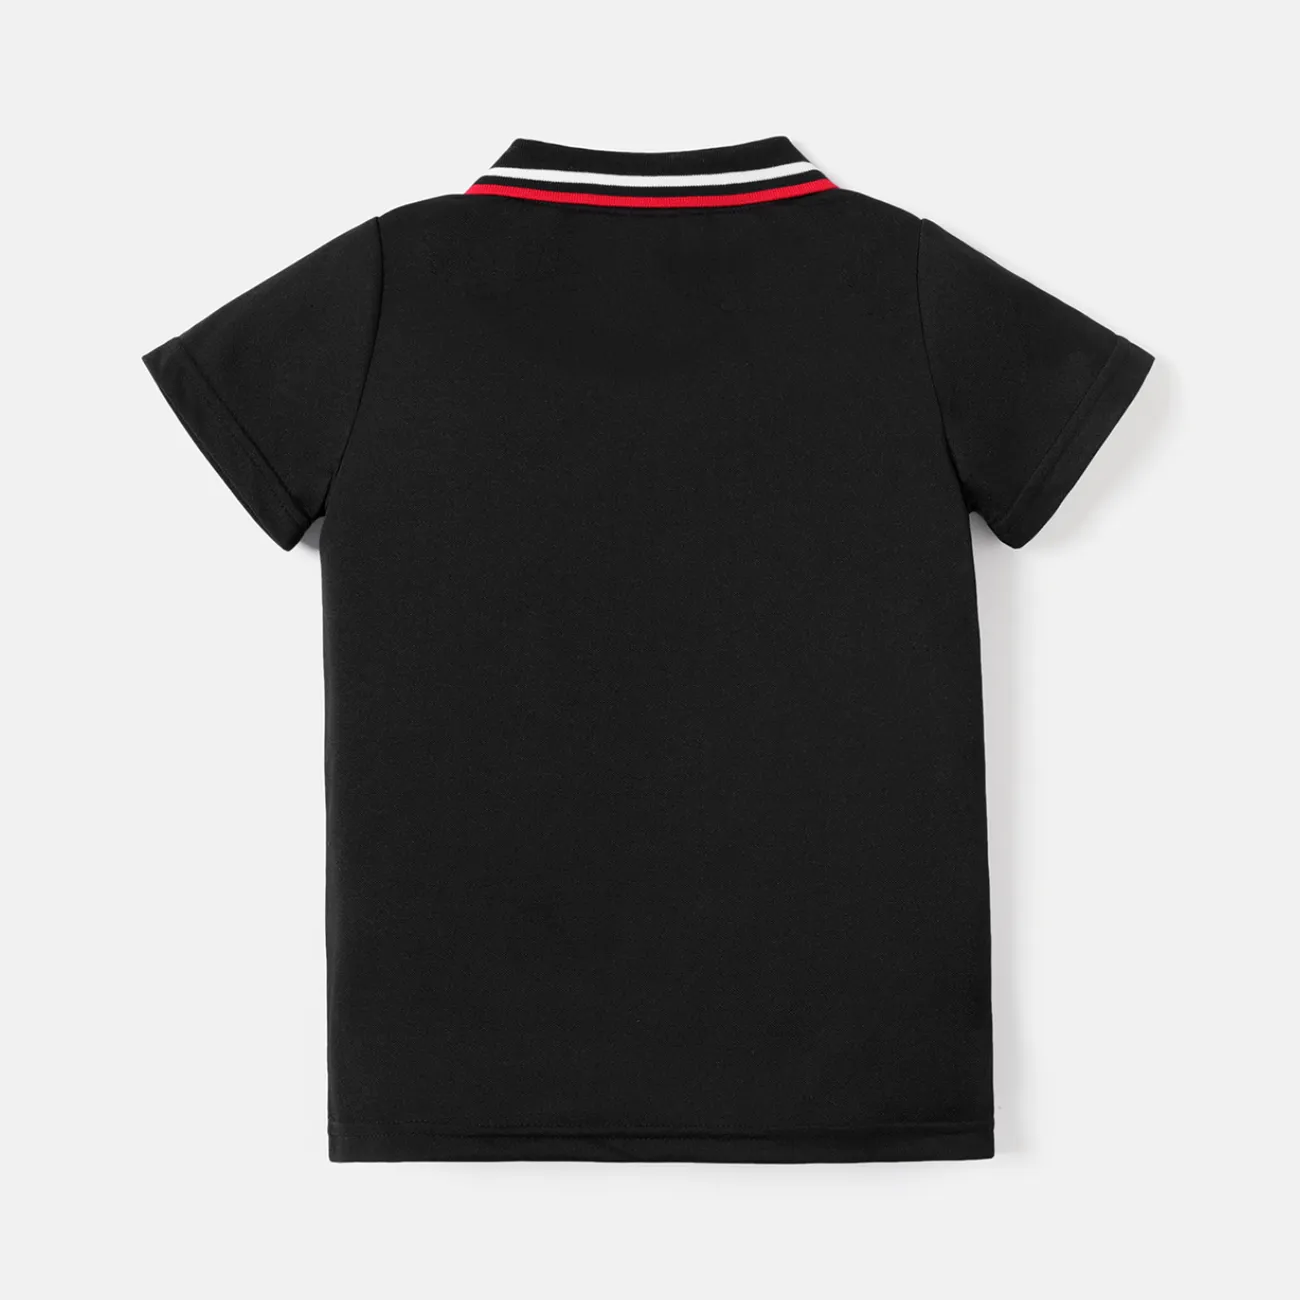 Kinder Jungen Revers Unifarben Kurzärmelig T-Shirts schwarz big image 1